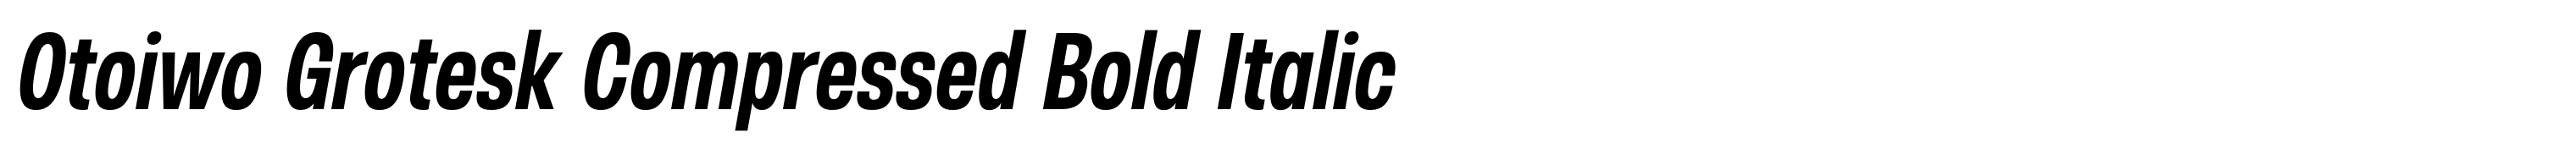 Otoiwo Grotesk Compressed Bold Italic